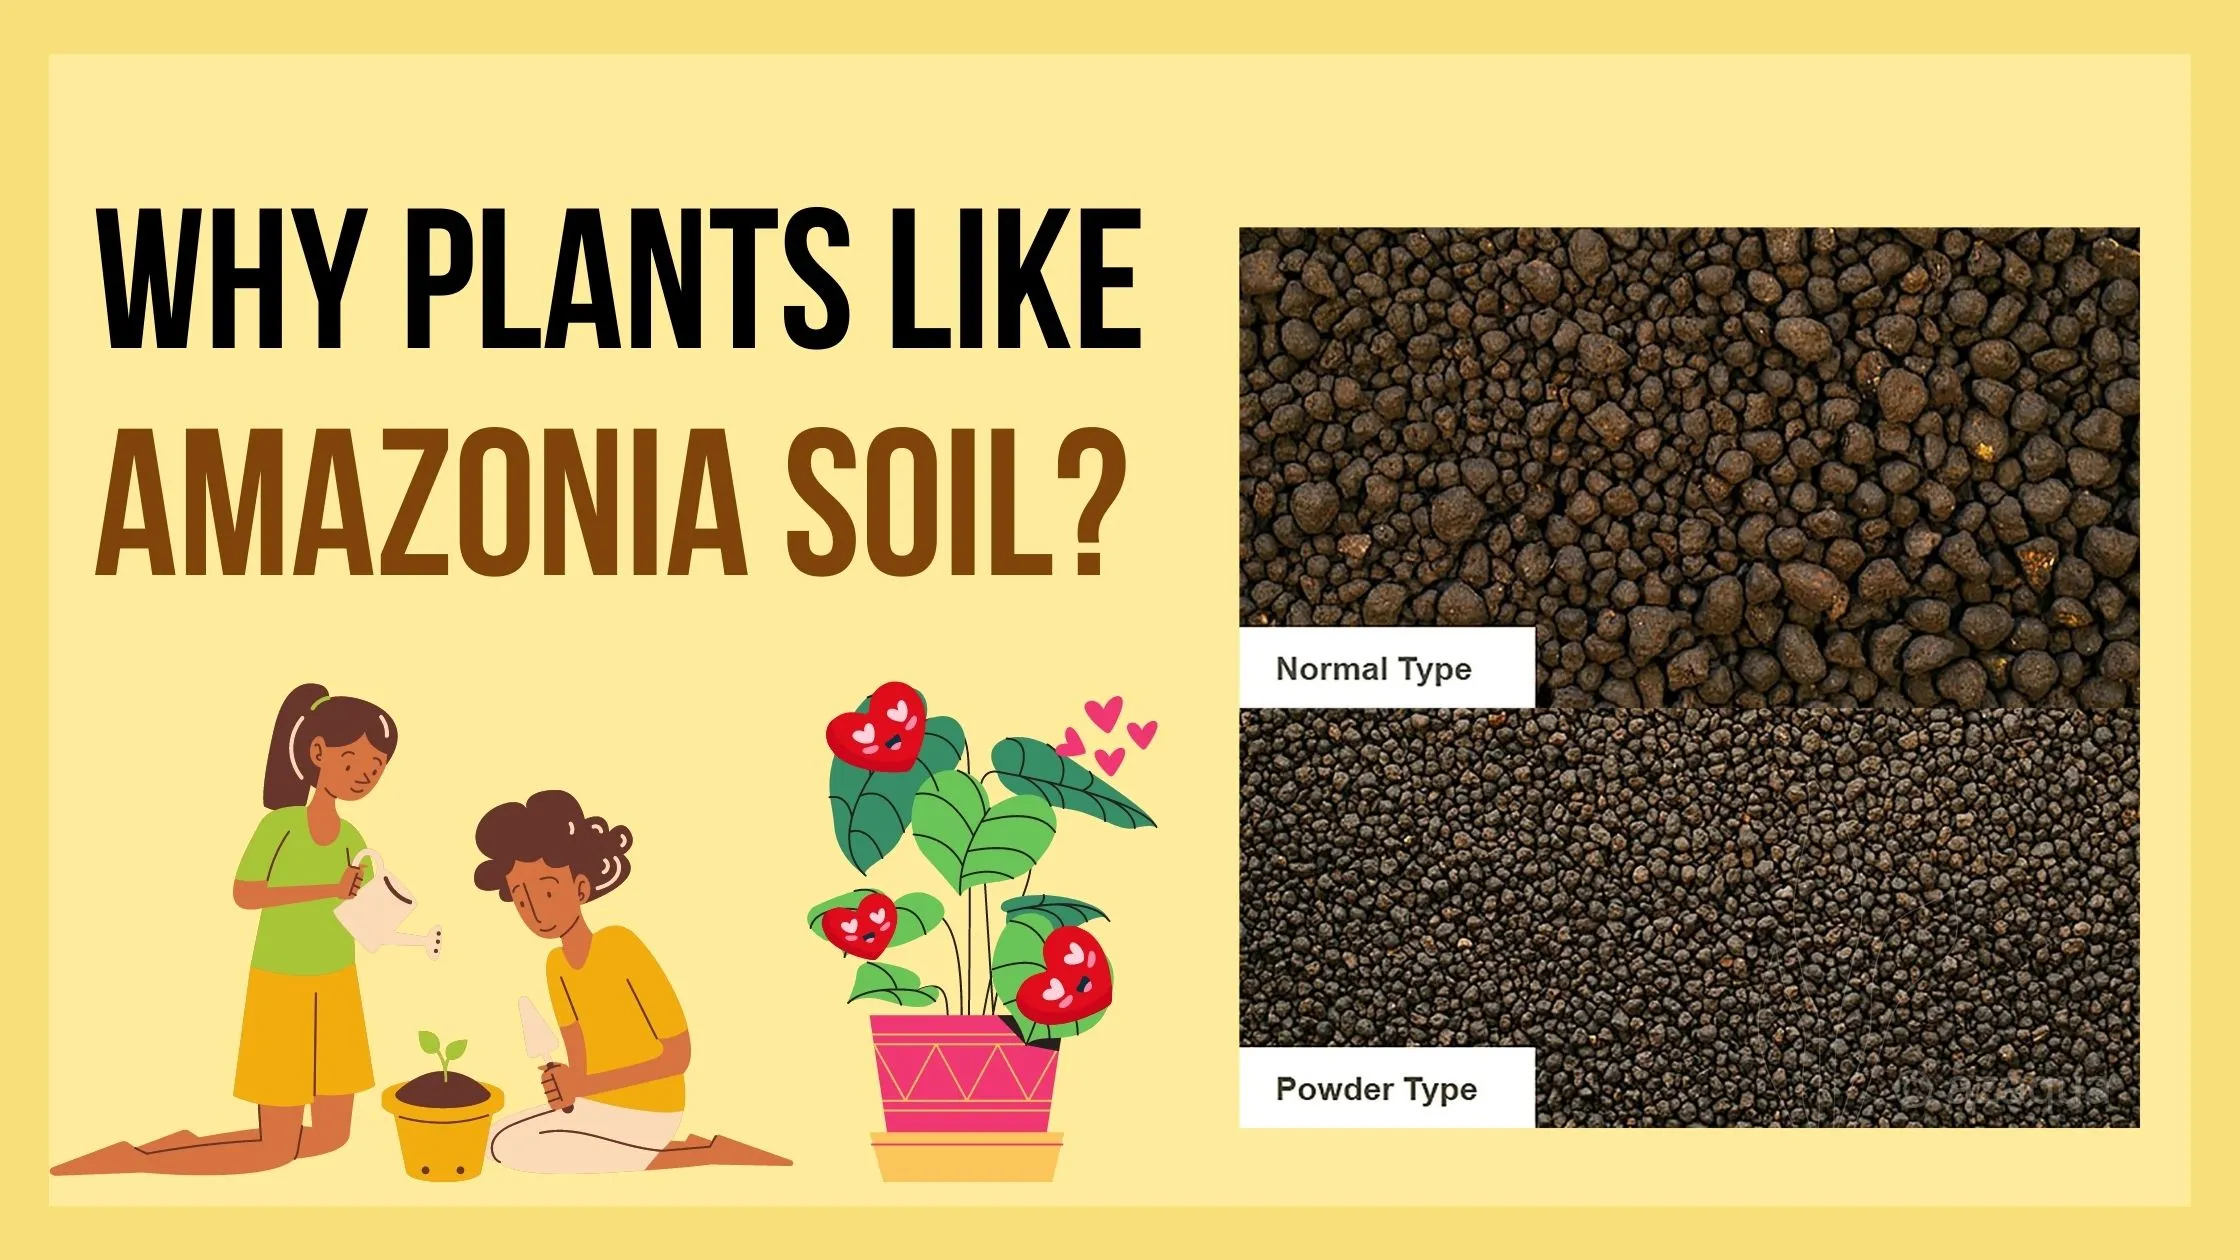 Why plants like Amazonia soil?